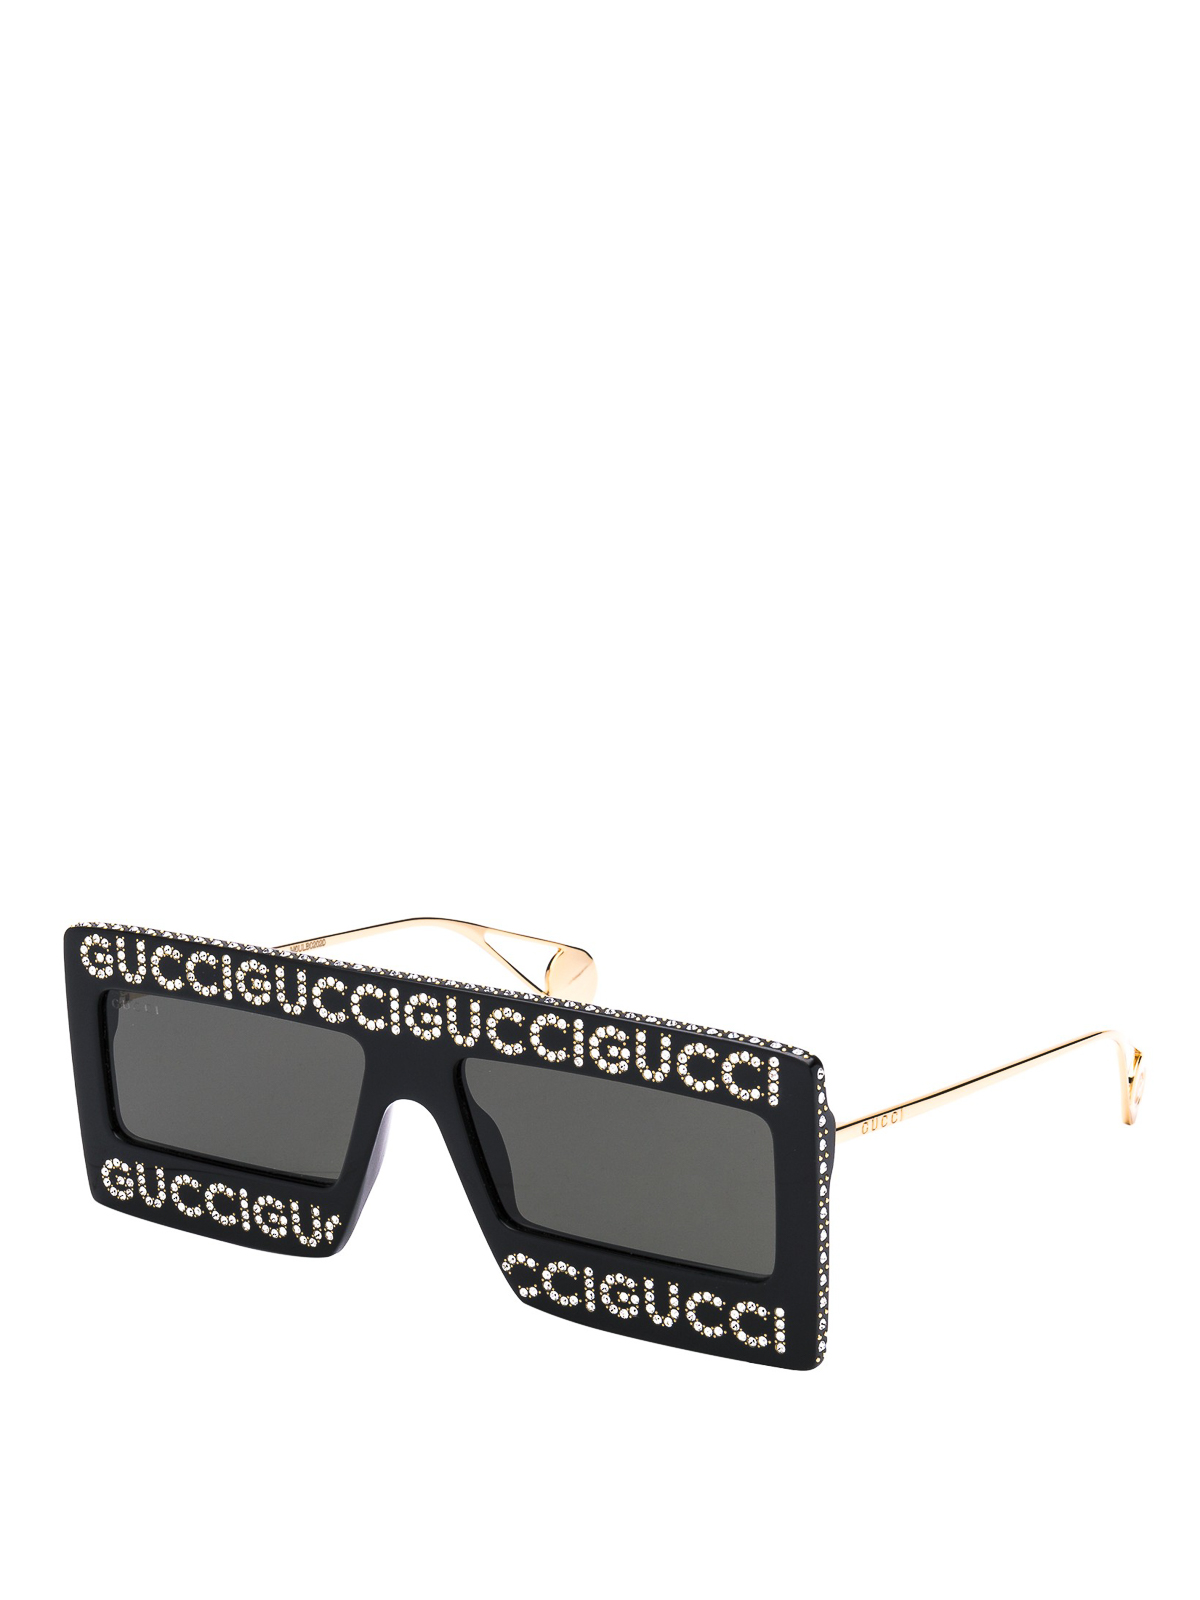 gucci shades with rhinestones